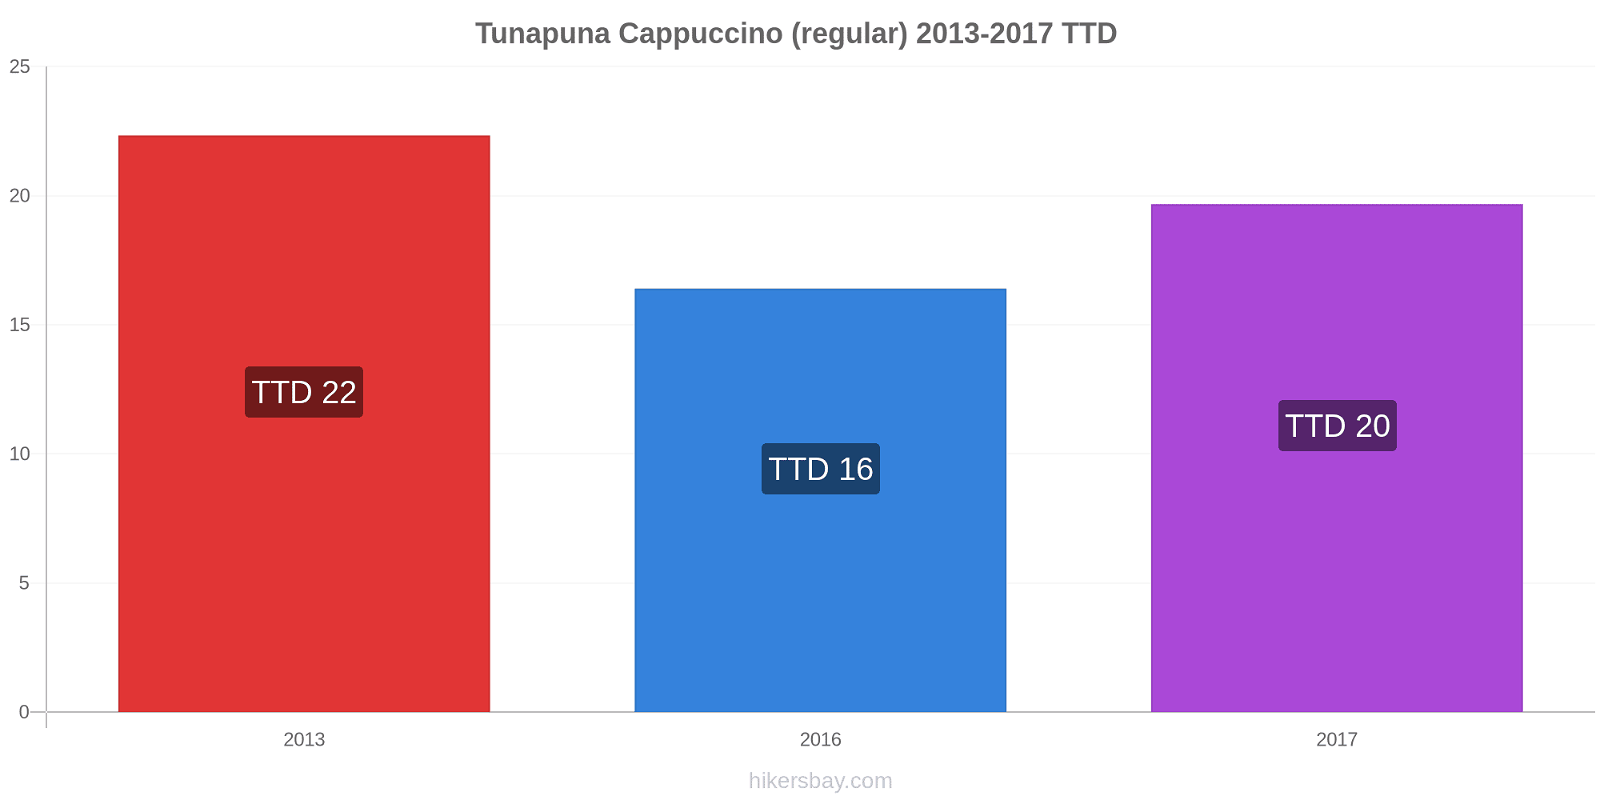 Tunapuna price changes Cappuccino (regular) hikersbay.com